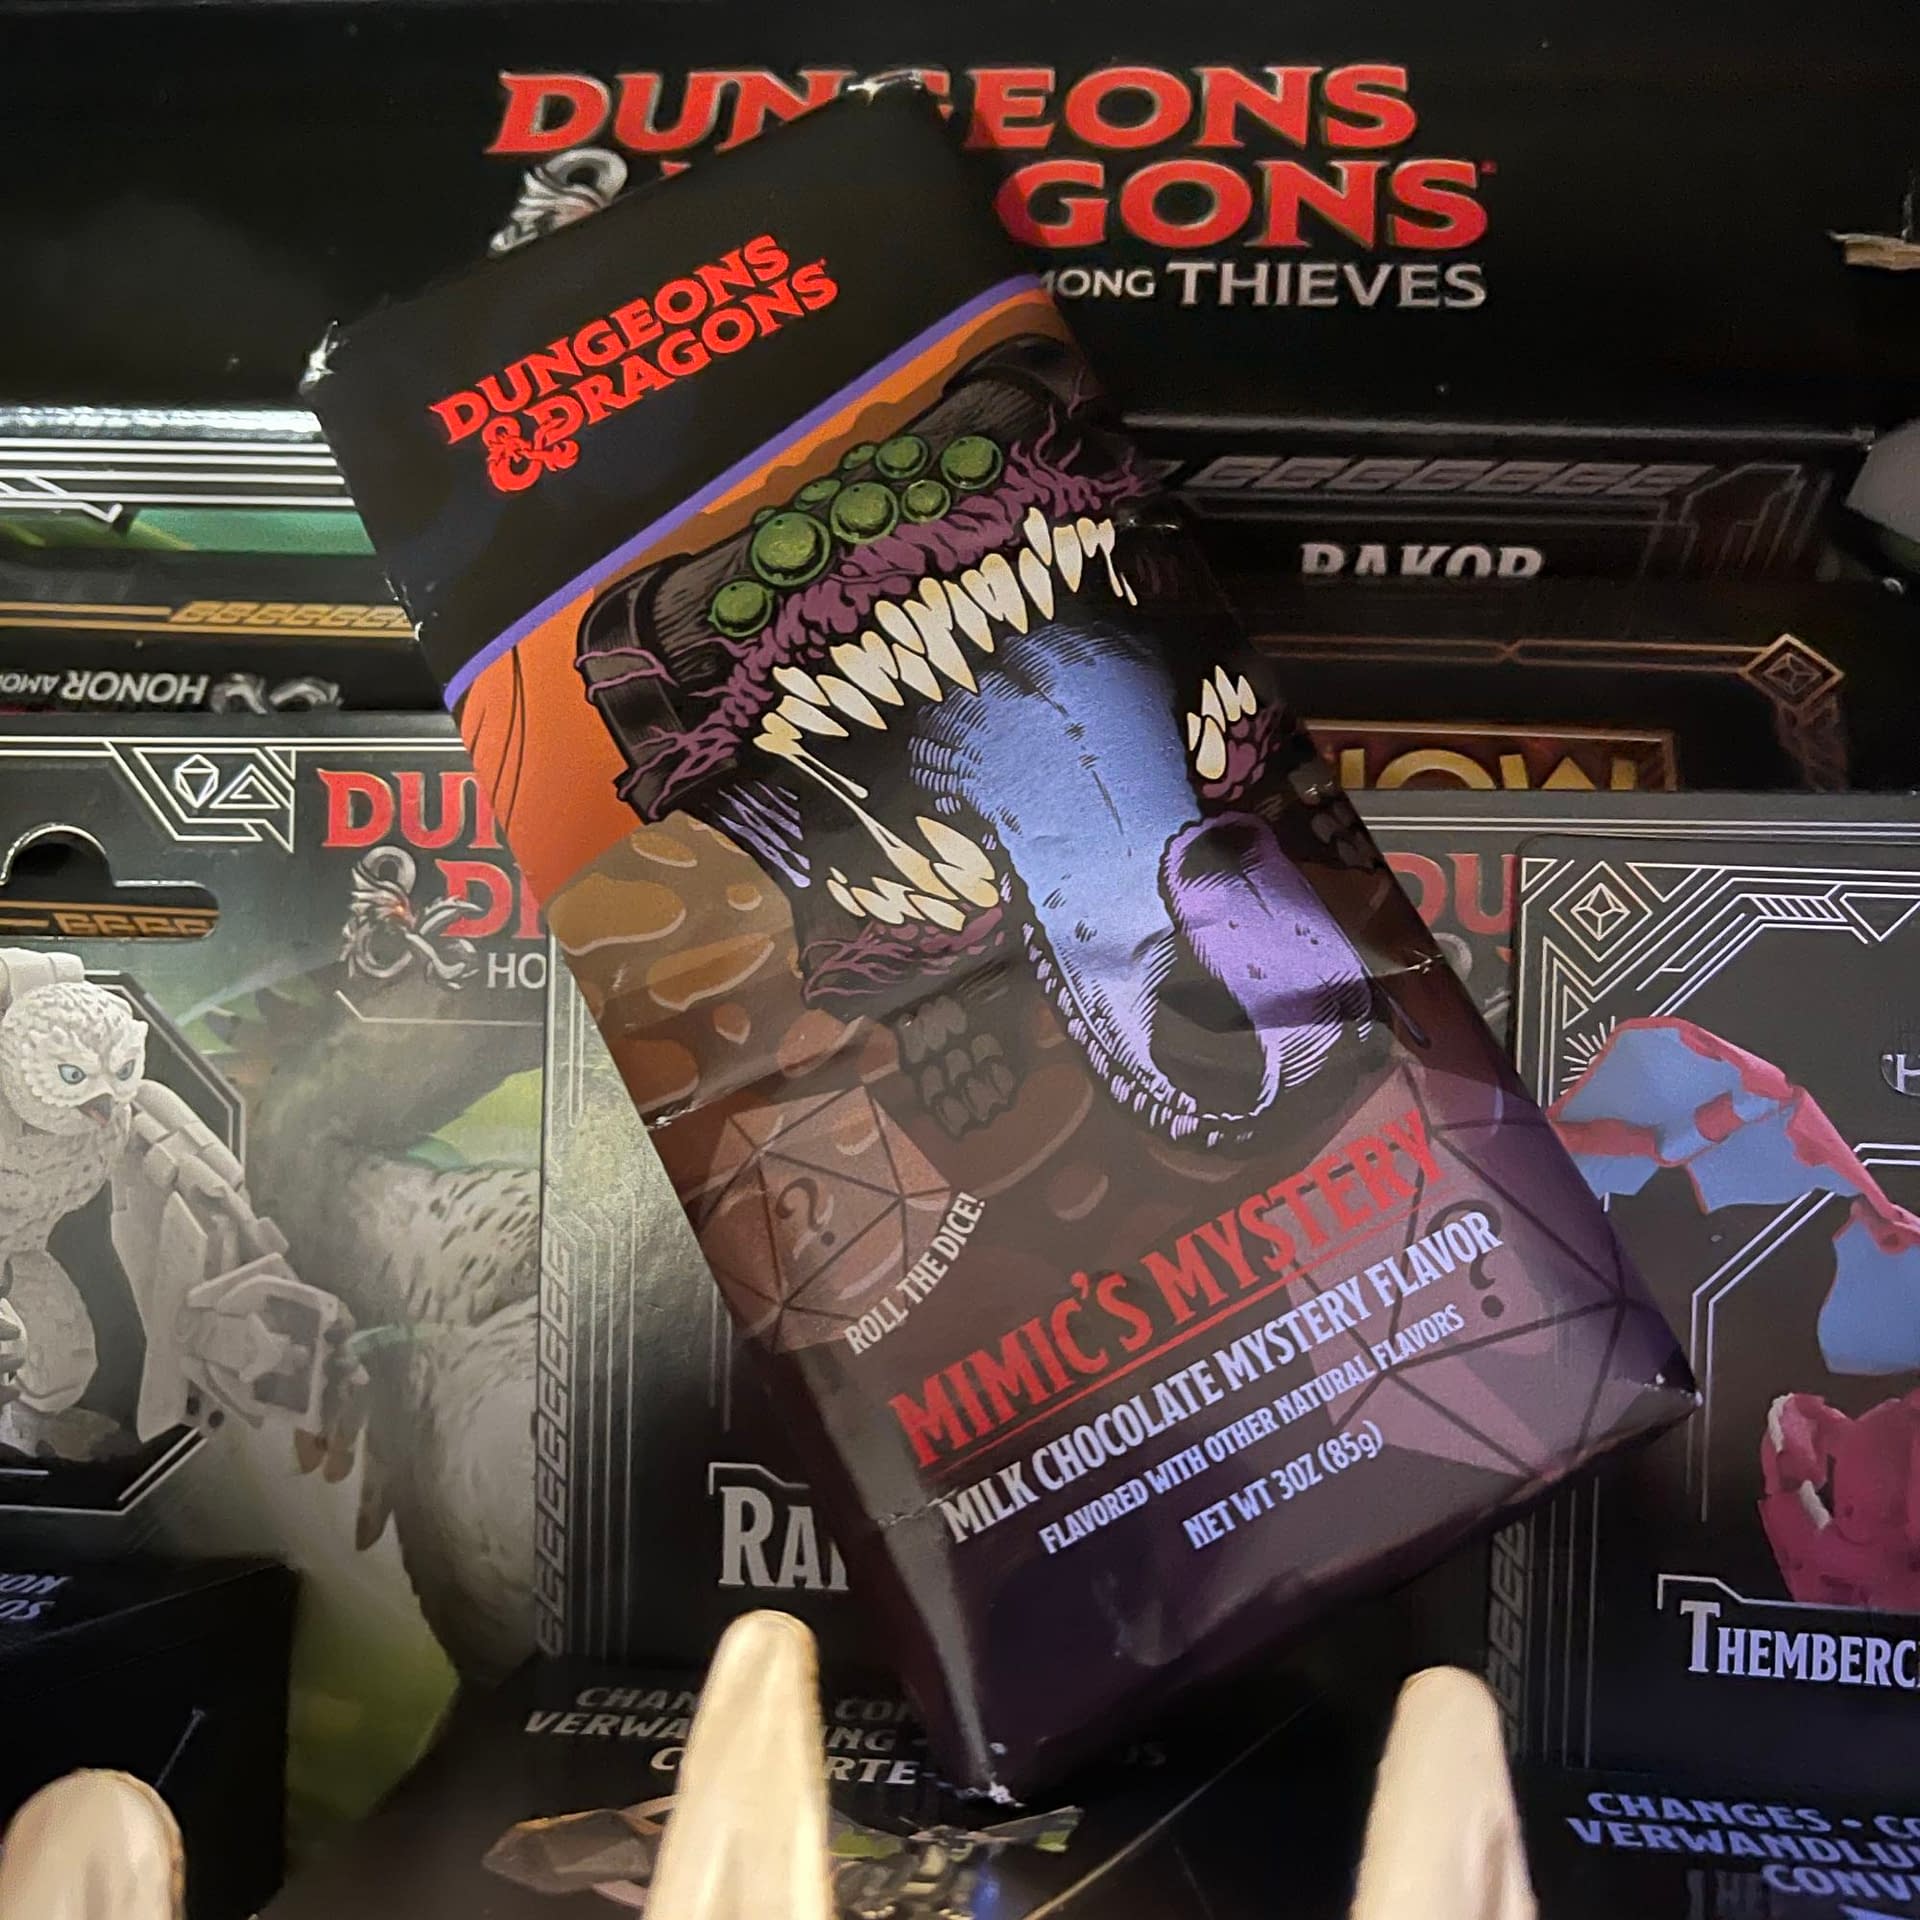 Hasbro Sent Us a Dungeons & Dragons: Honor Among Thieves Mimic